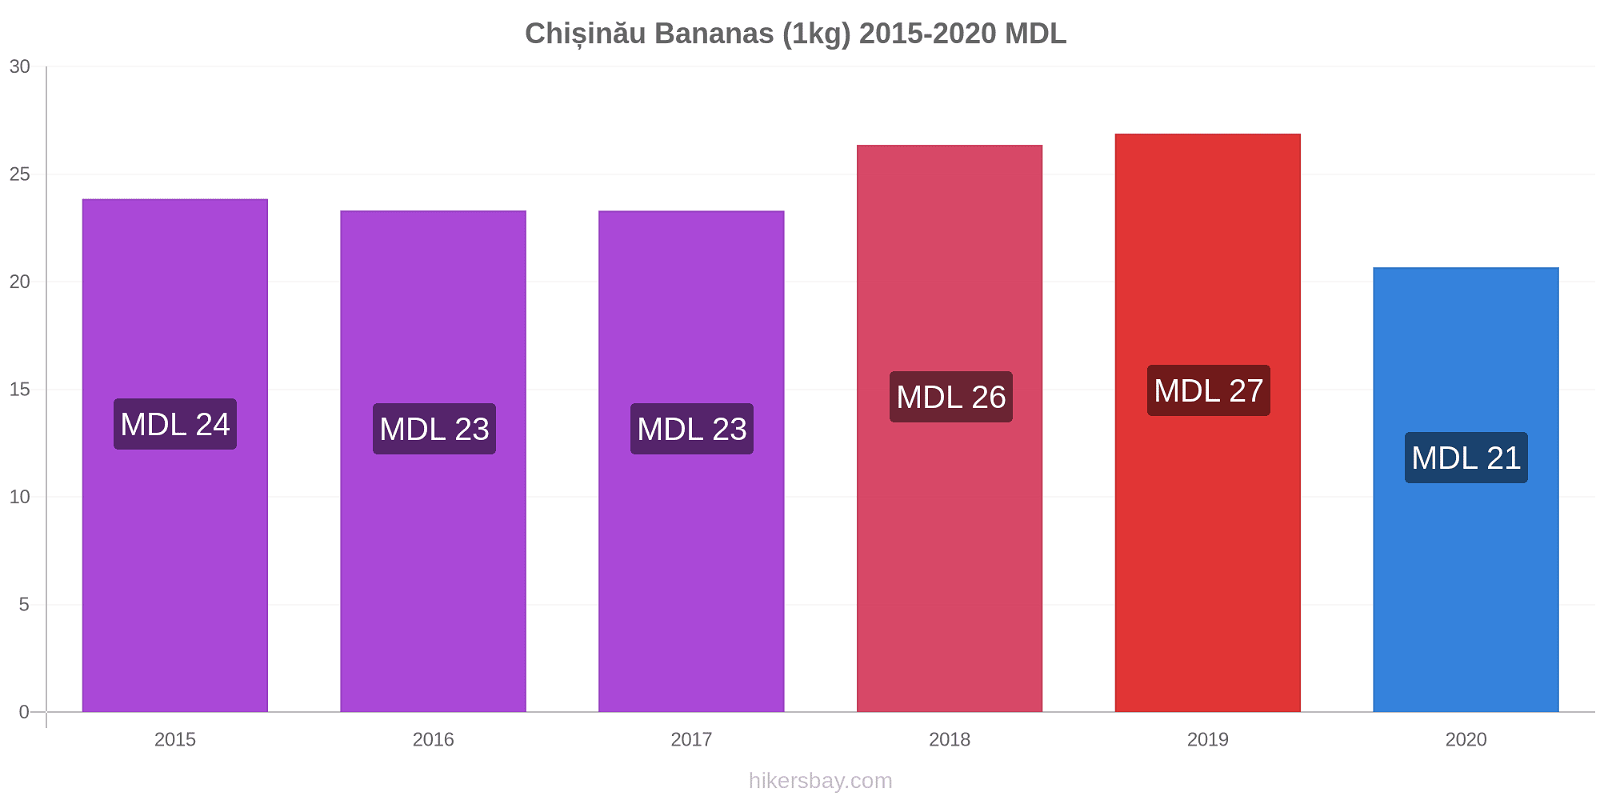 Chișinău price changes Bananas (1kg) hikersbay.com